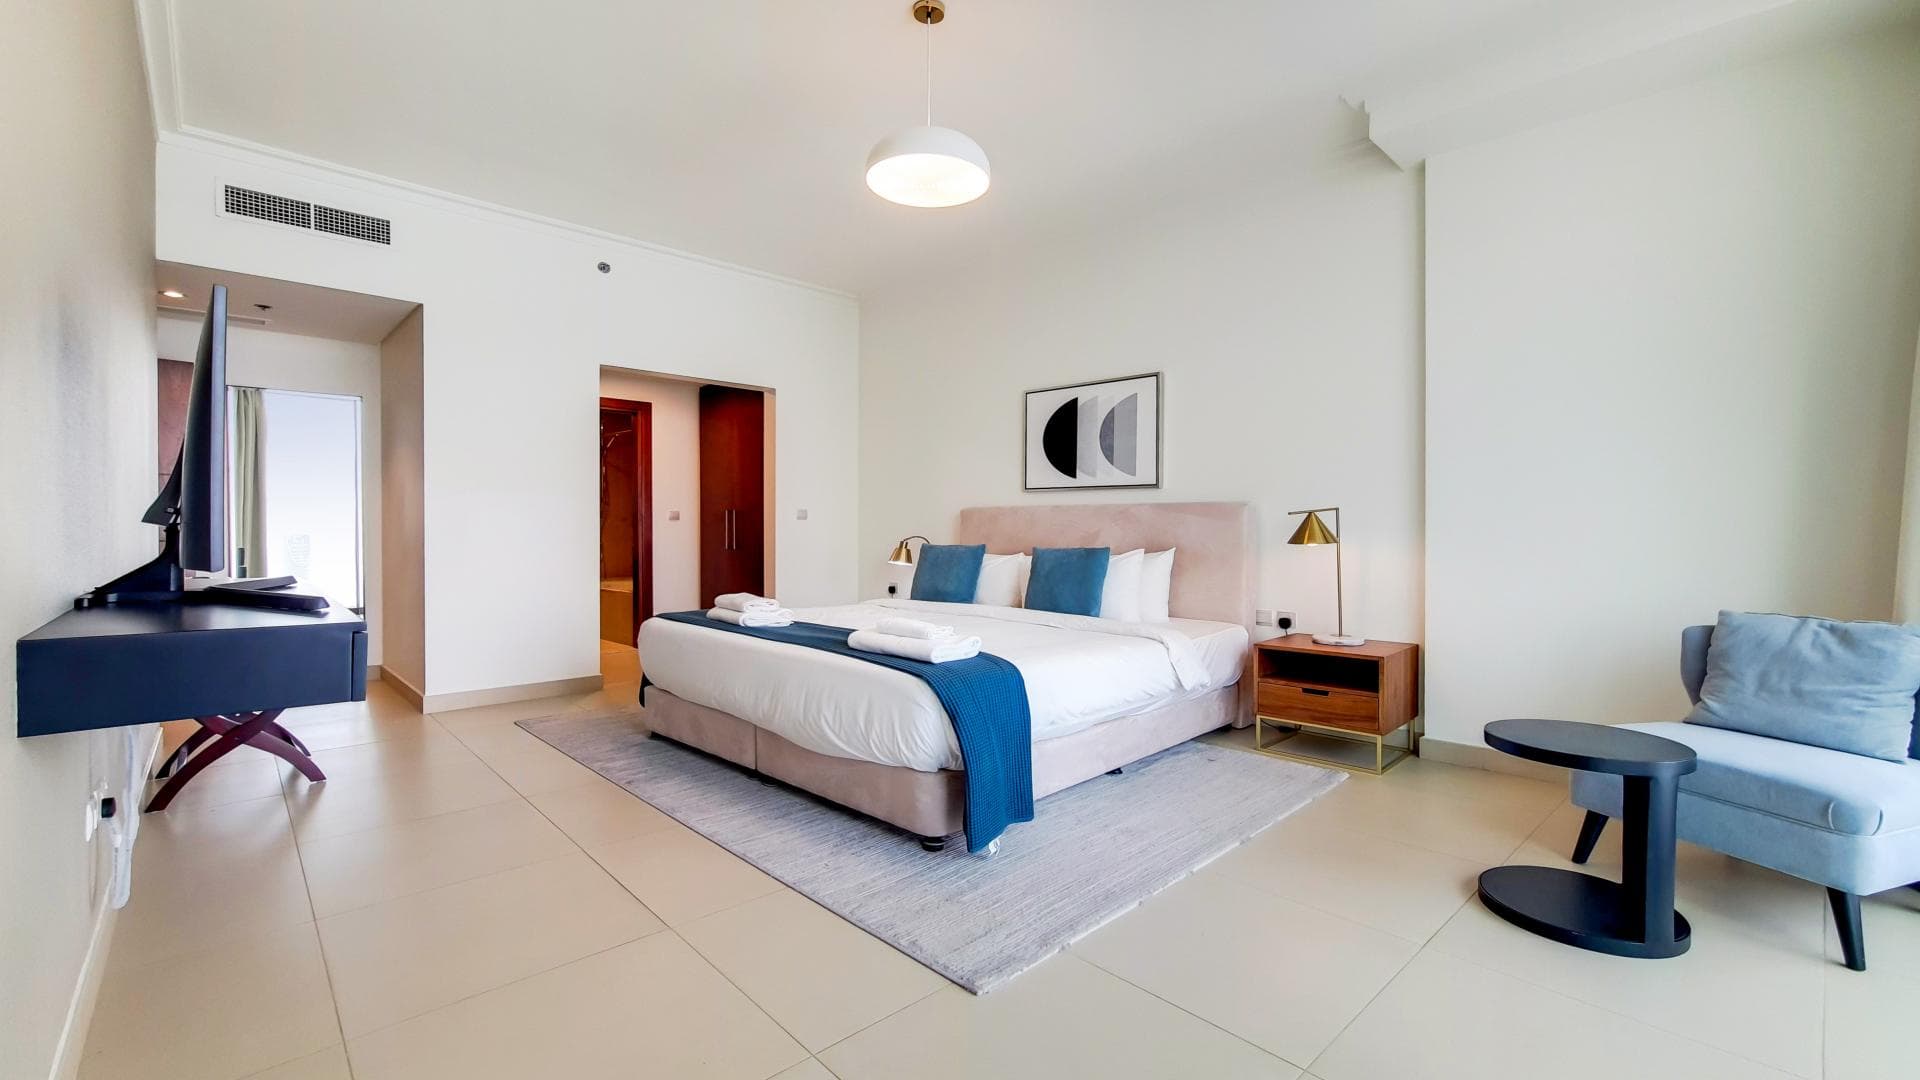 3 Bedroom Apartment For Rent Deema 1 Lp36267 1ddb7dceececb800.jpg